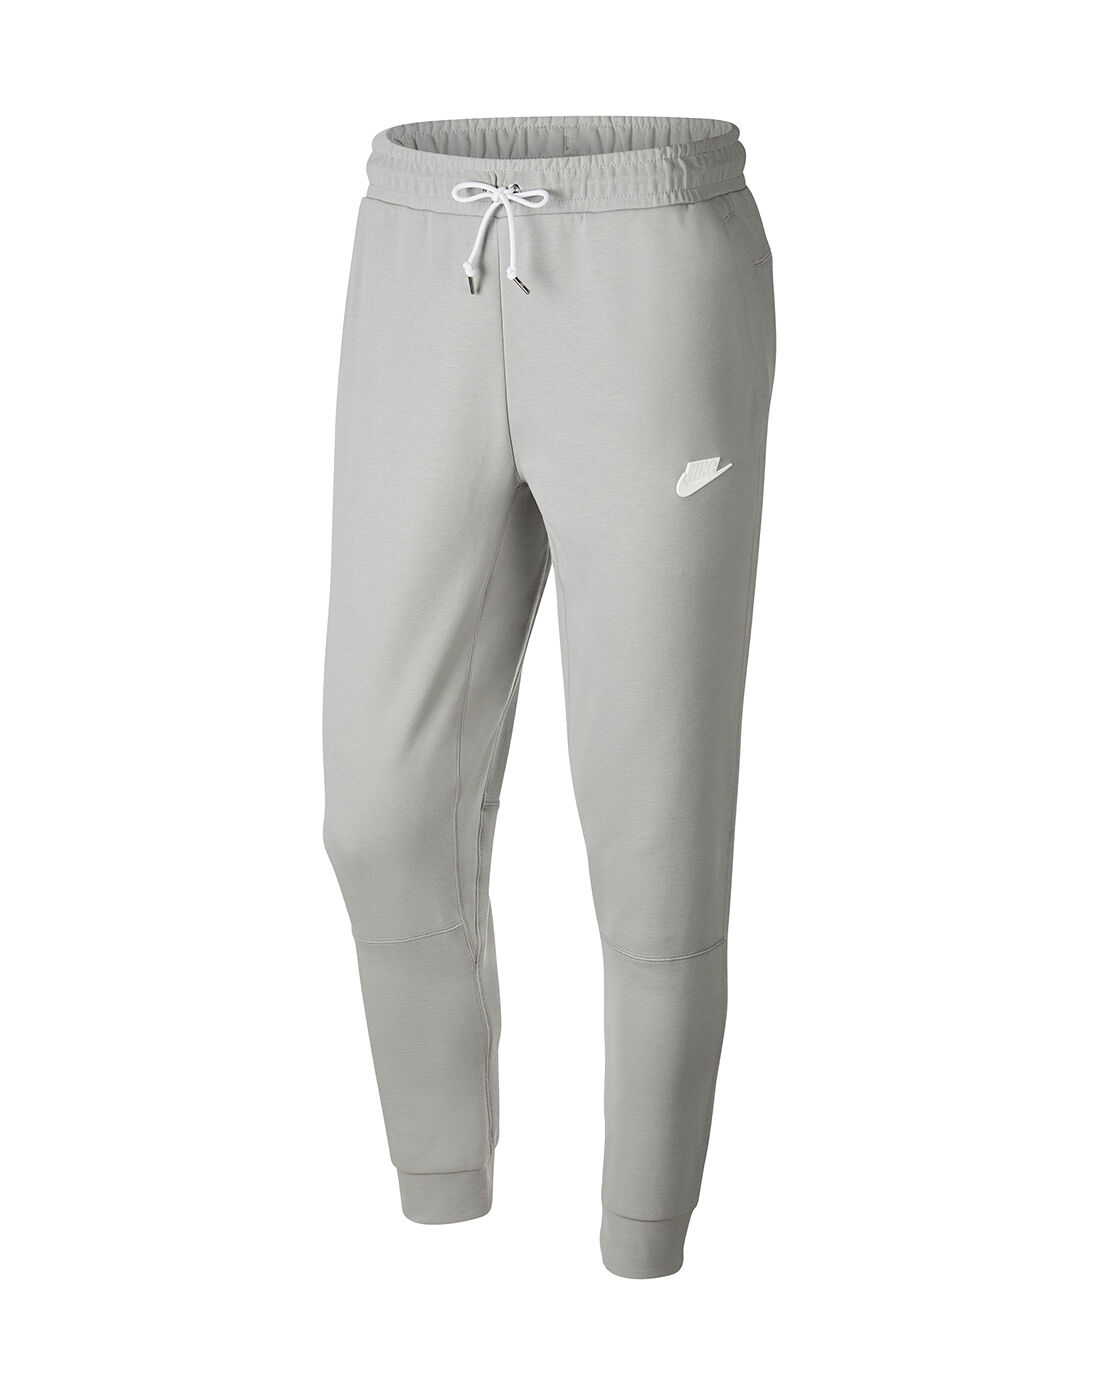 Nike Mens Modern Fleece Joggers - Grey 